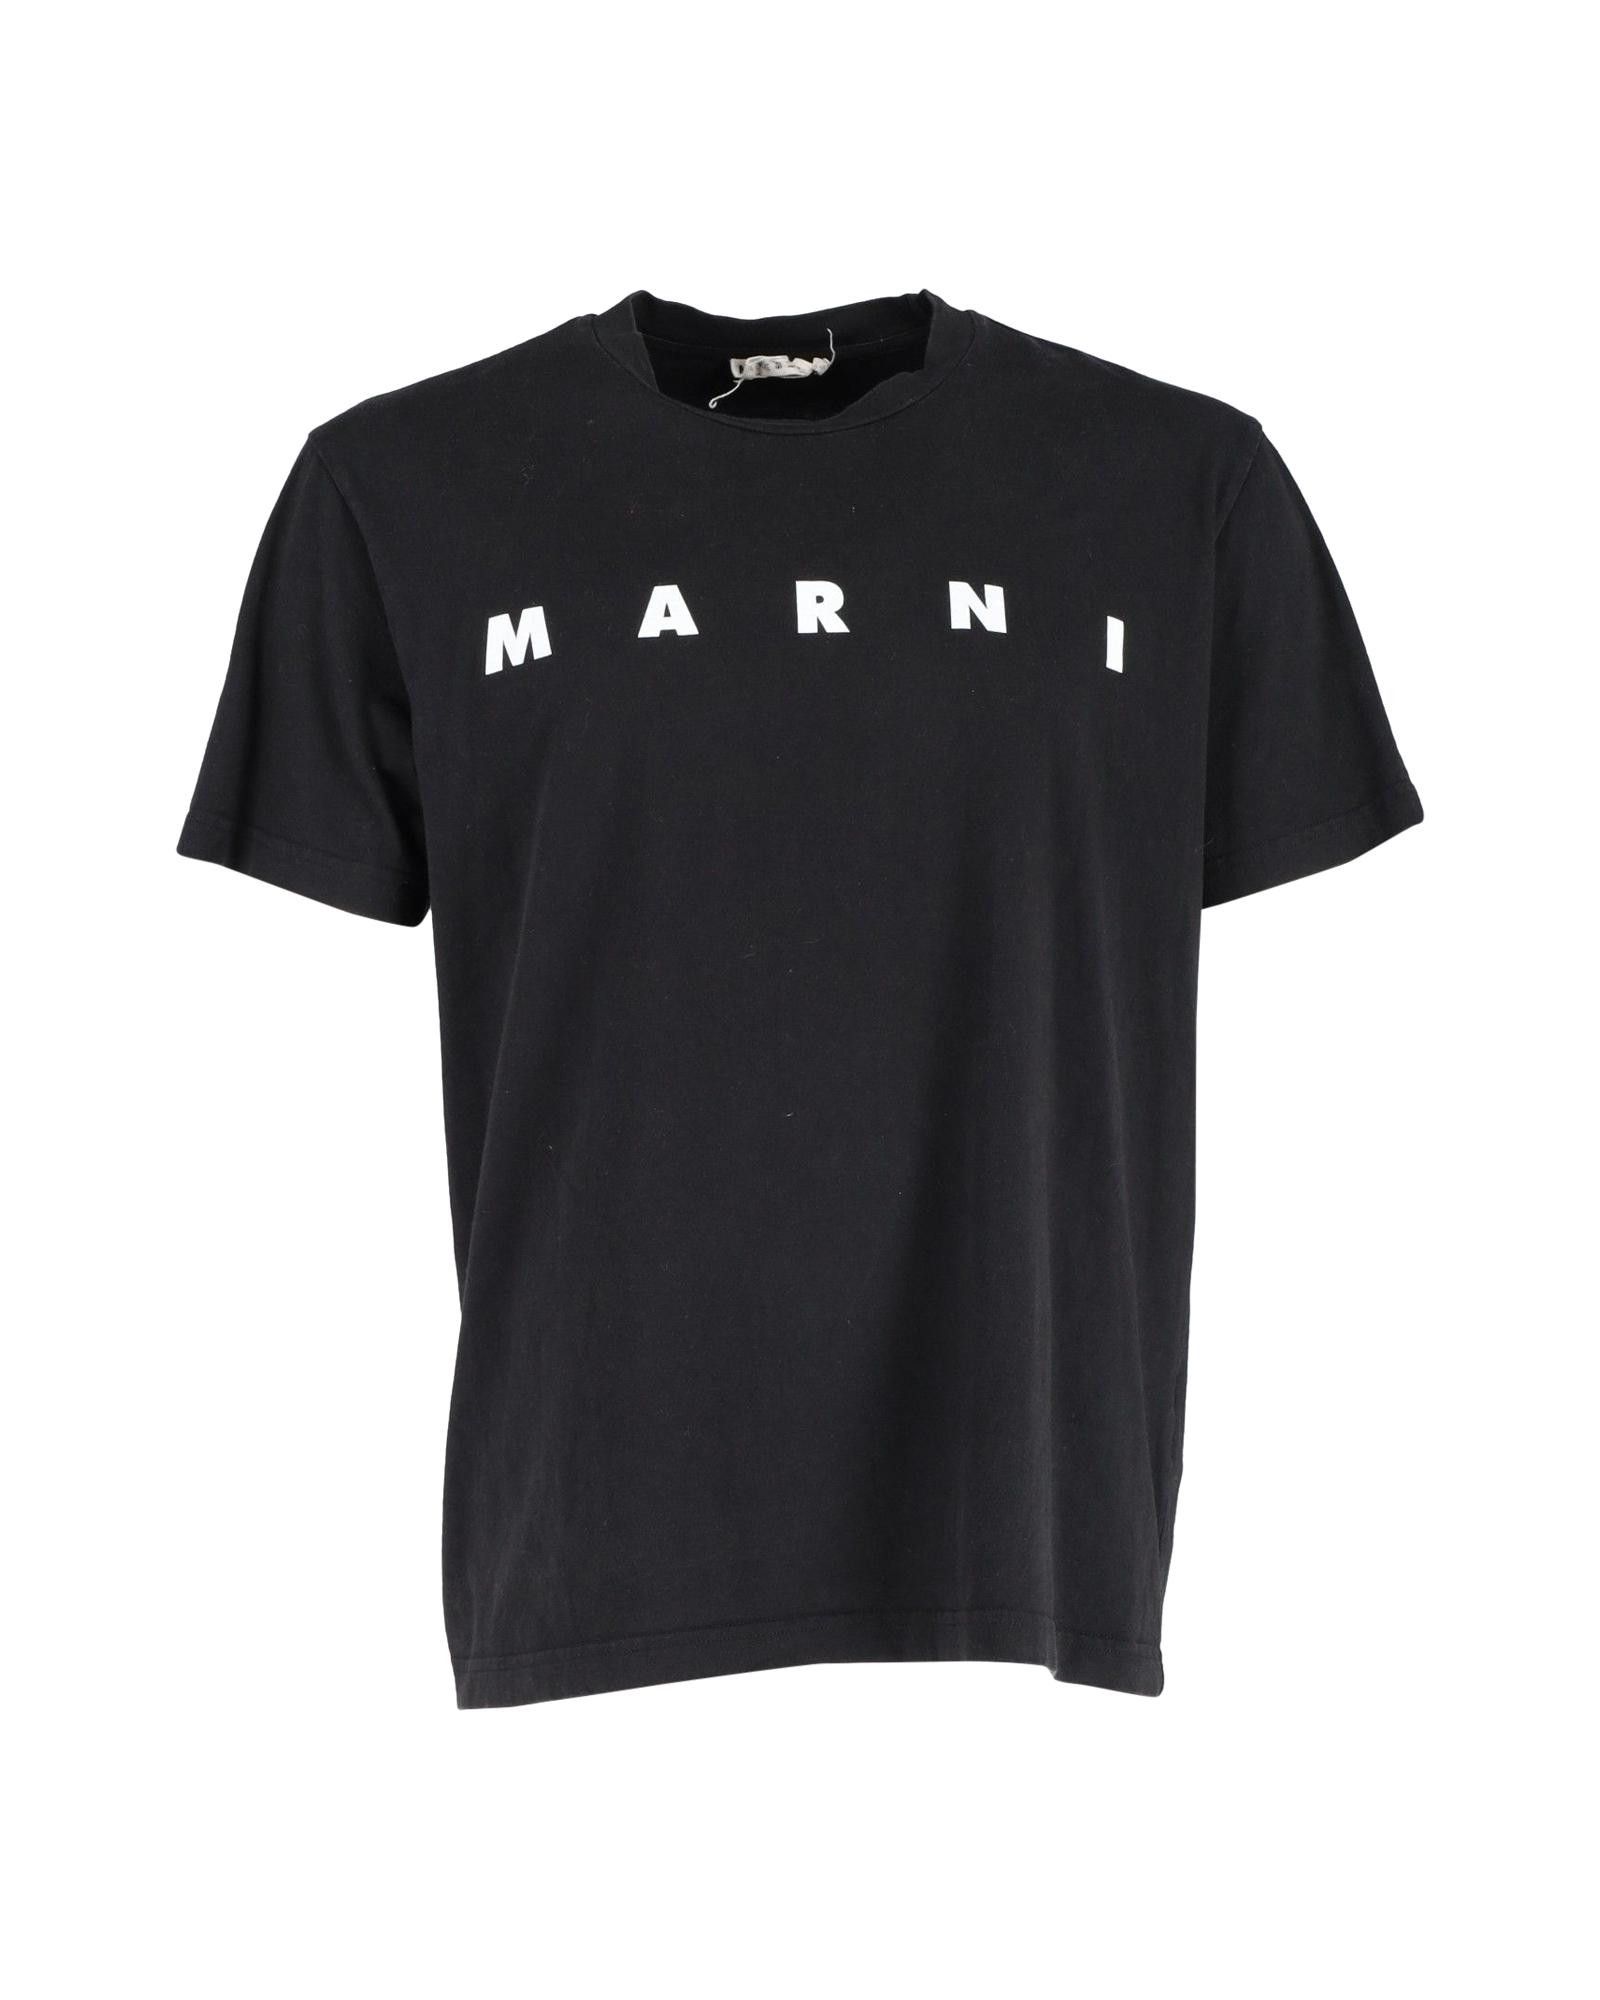 Marni Black Logo Cotton T-shirt by Marni | Grailed